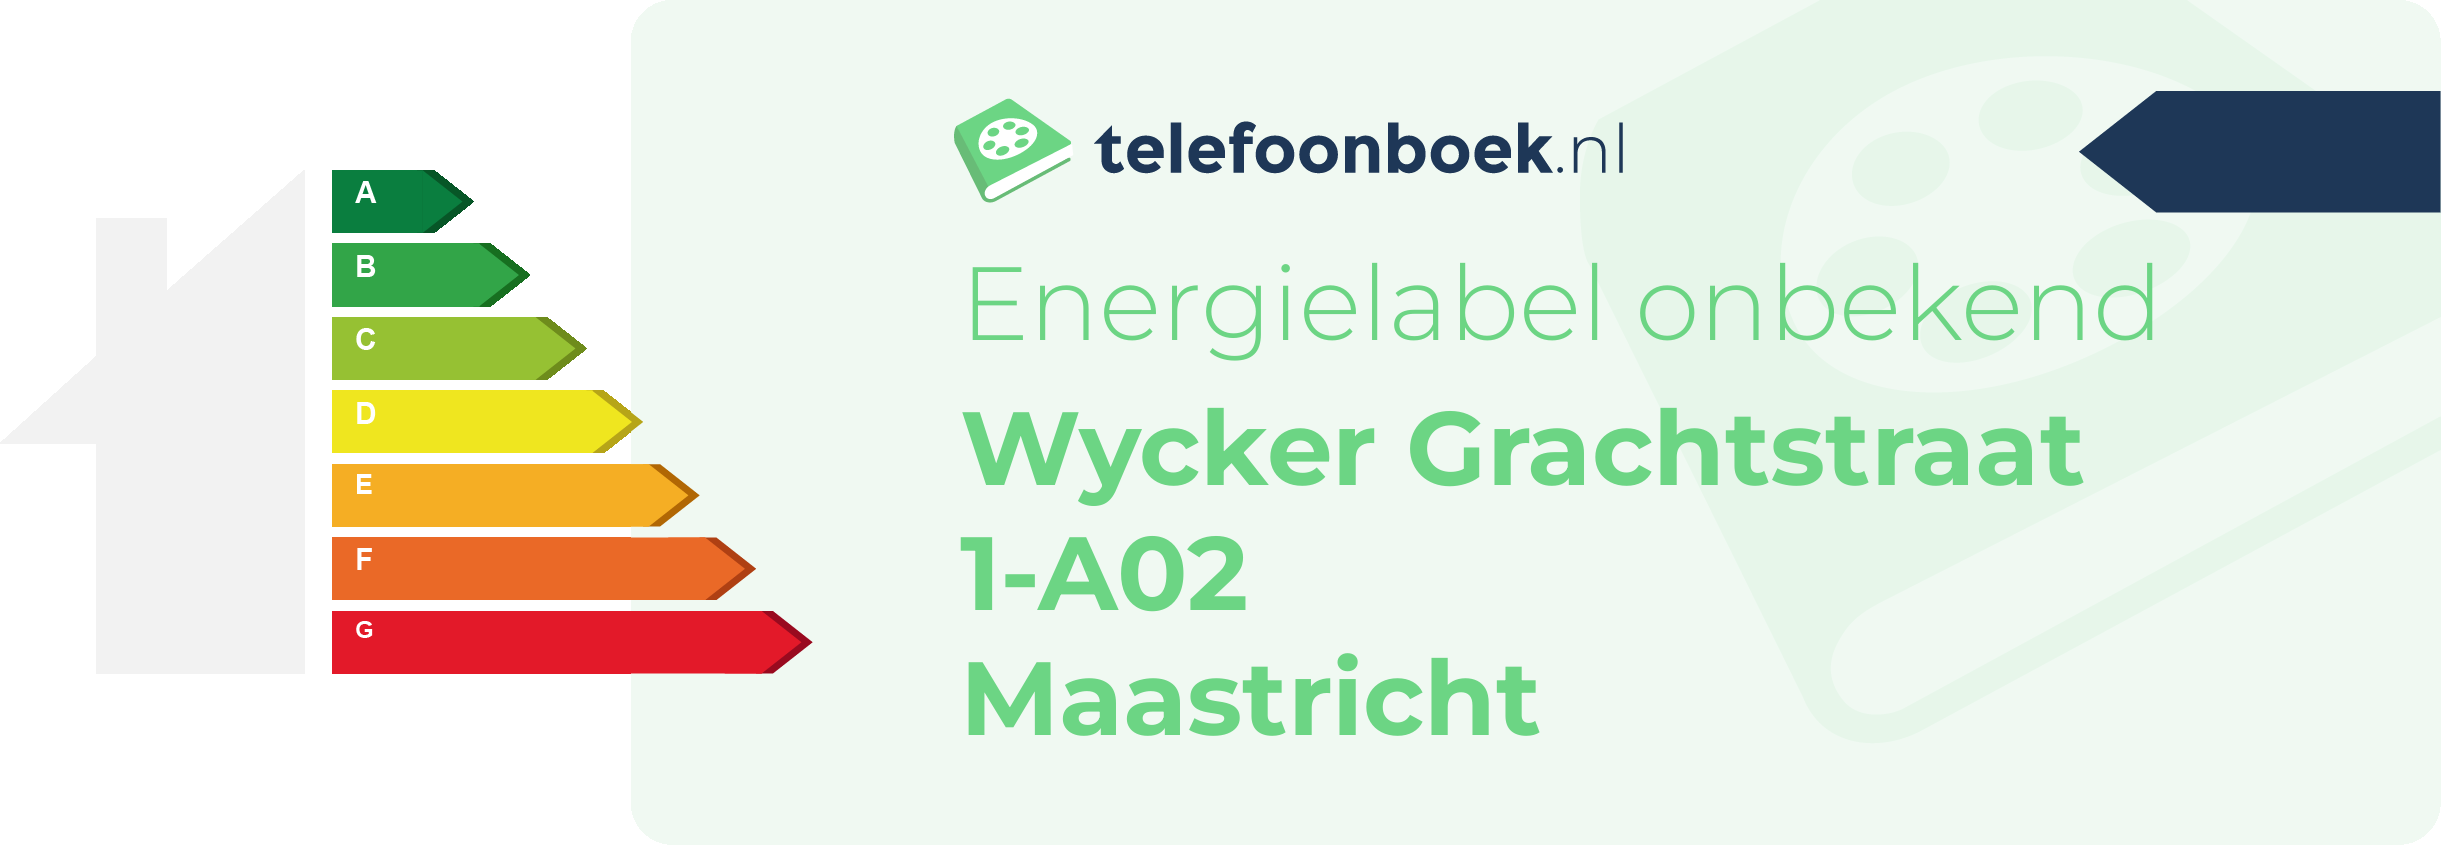 Energielabel Wycker Grachtstraat 1-A02 Maastricht